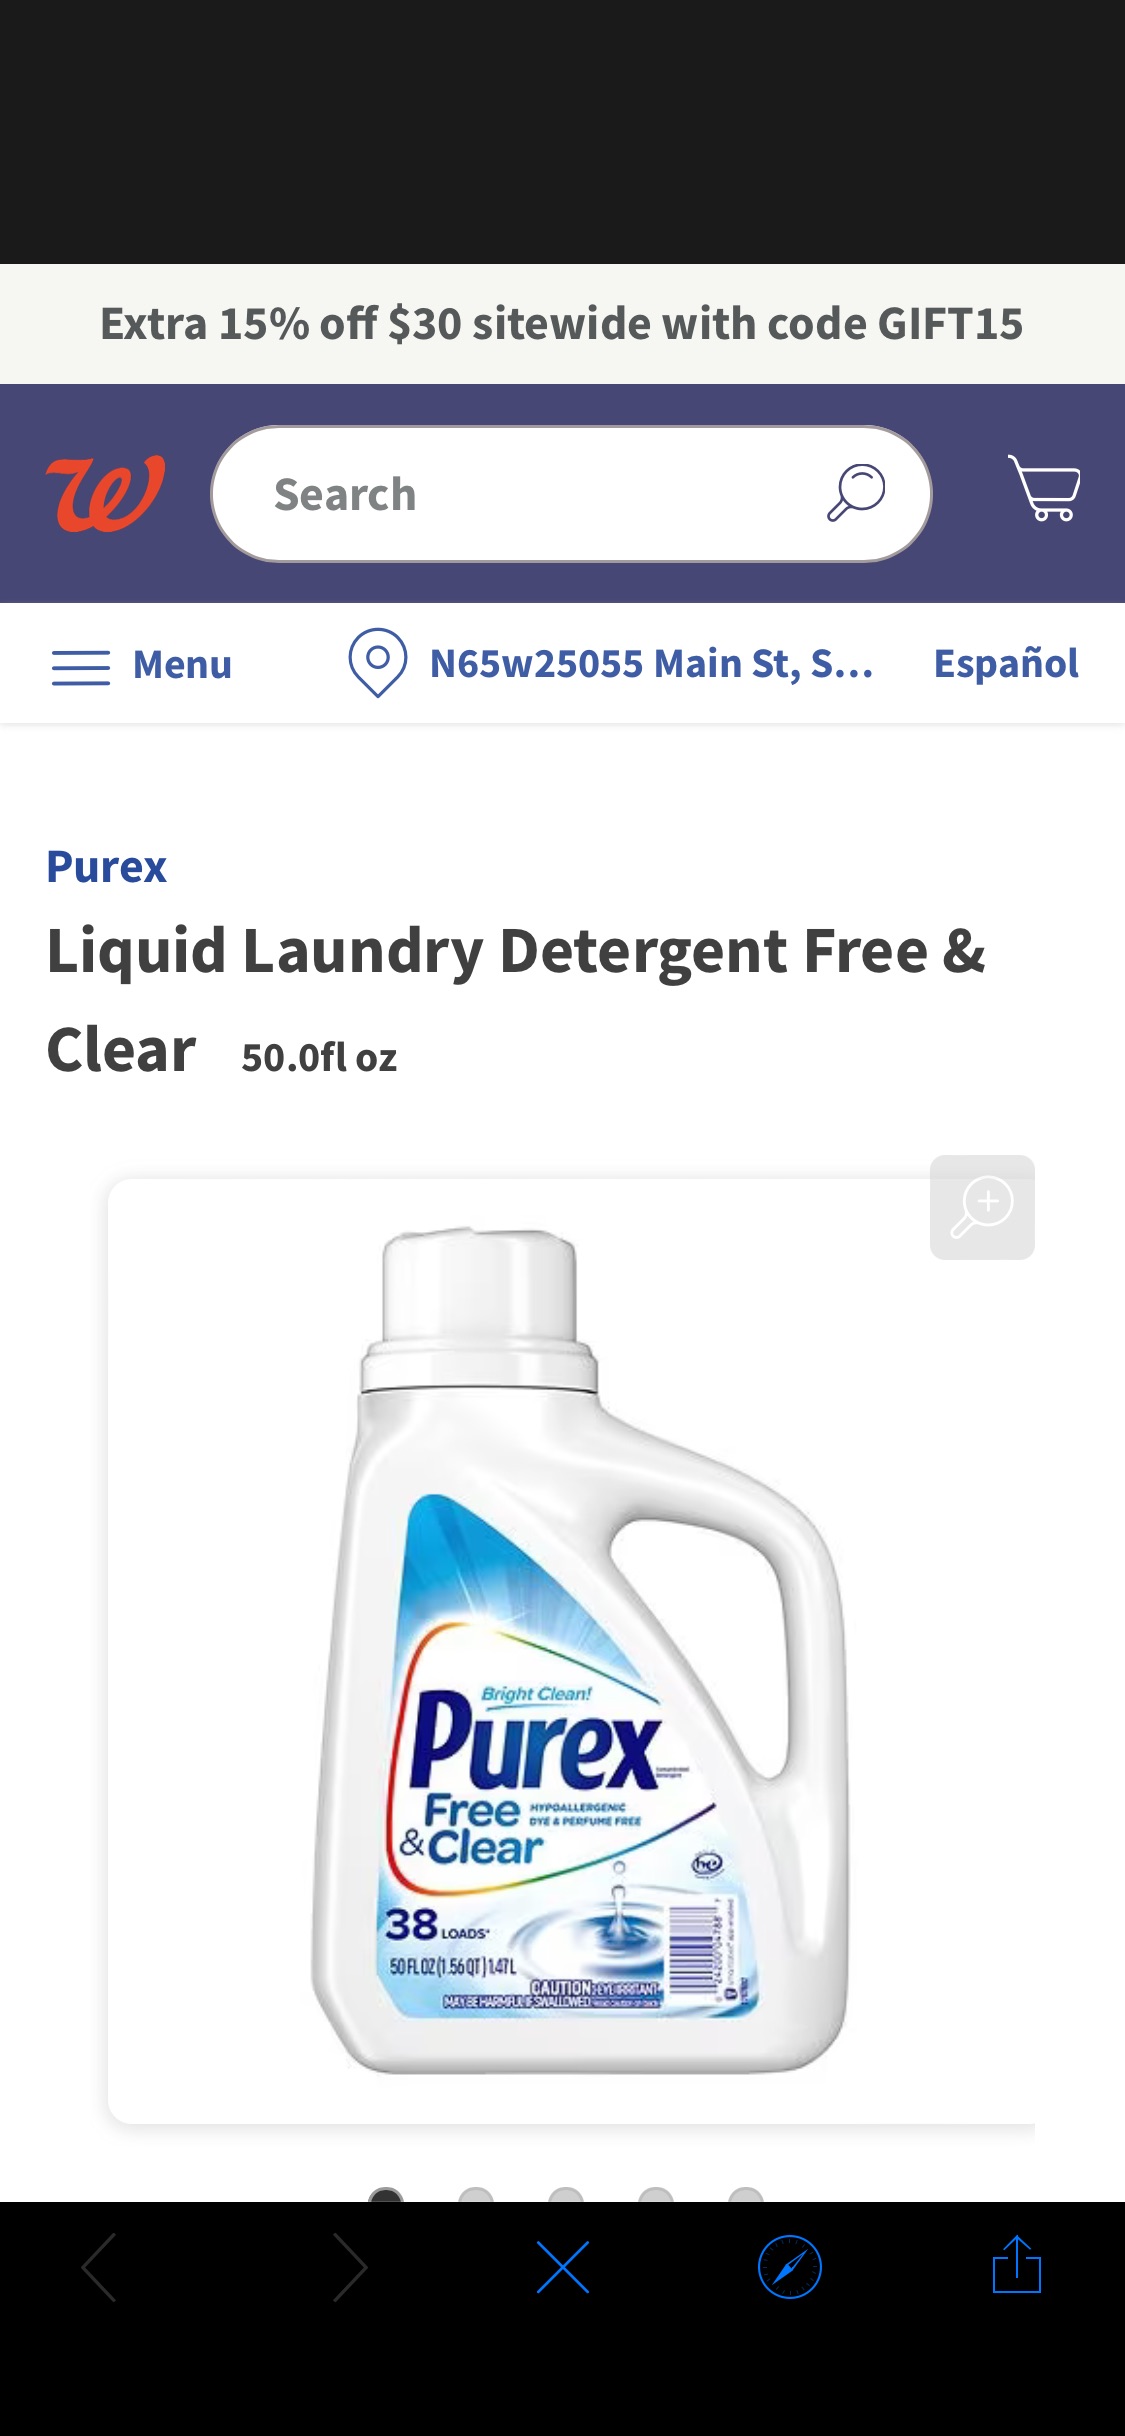 Purex Liquid Laundry Detergent Free & Clear | Walgreens